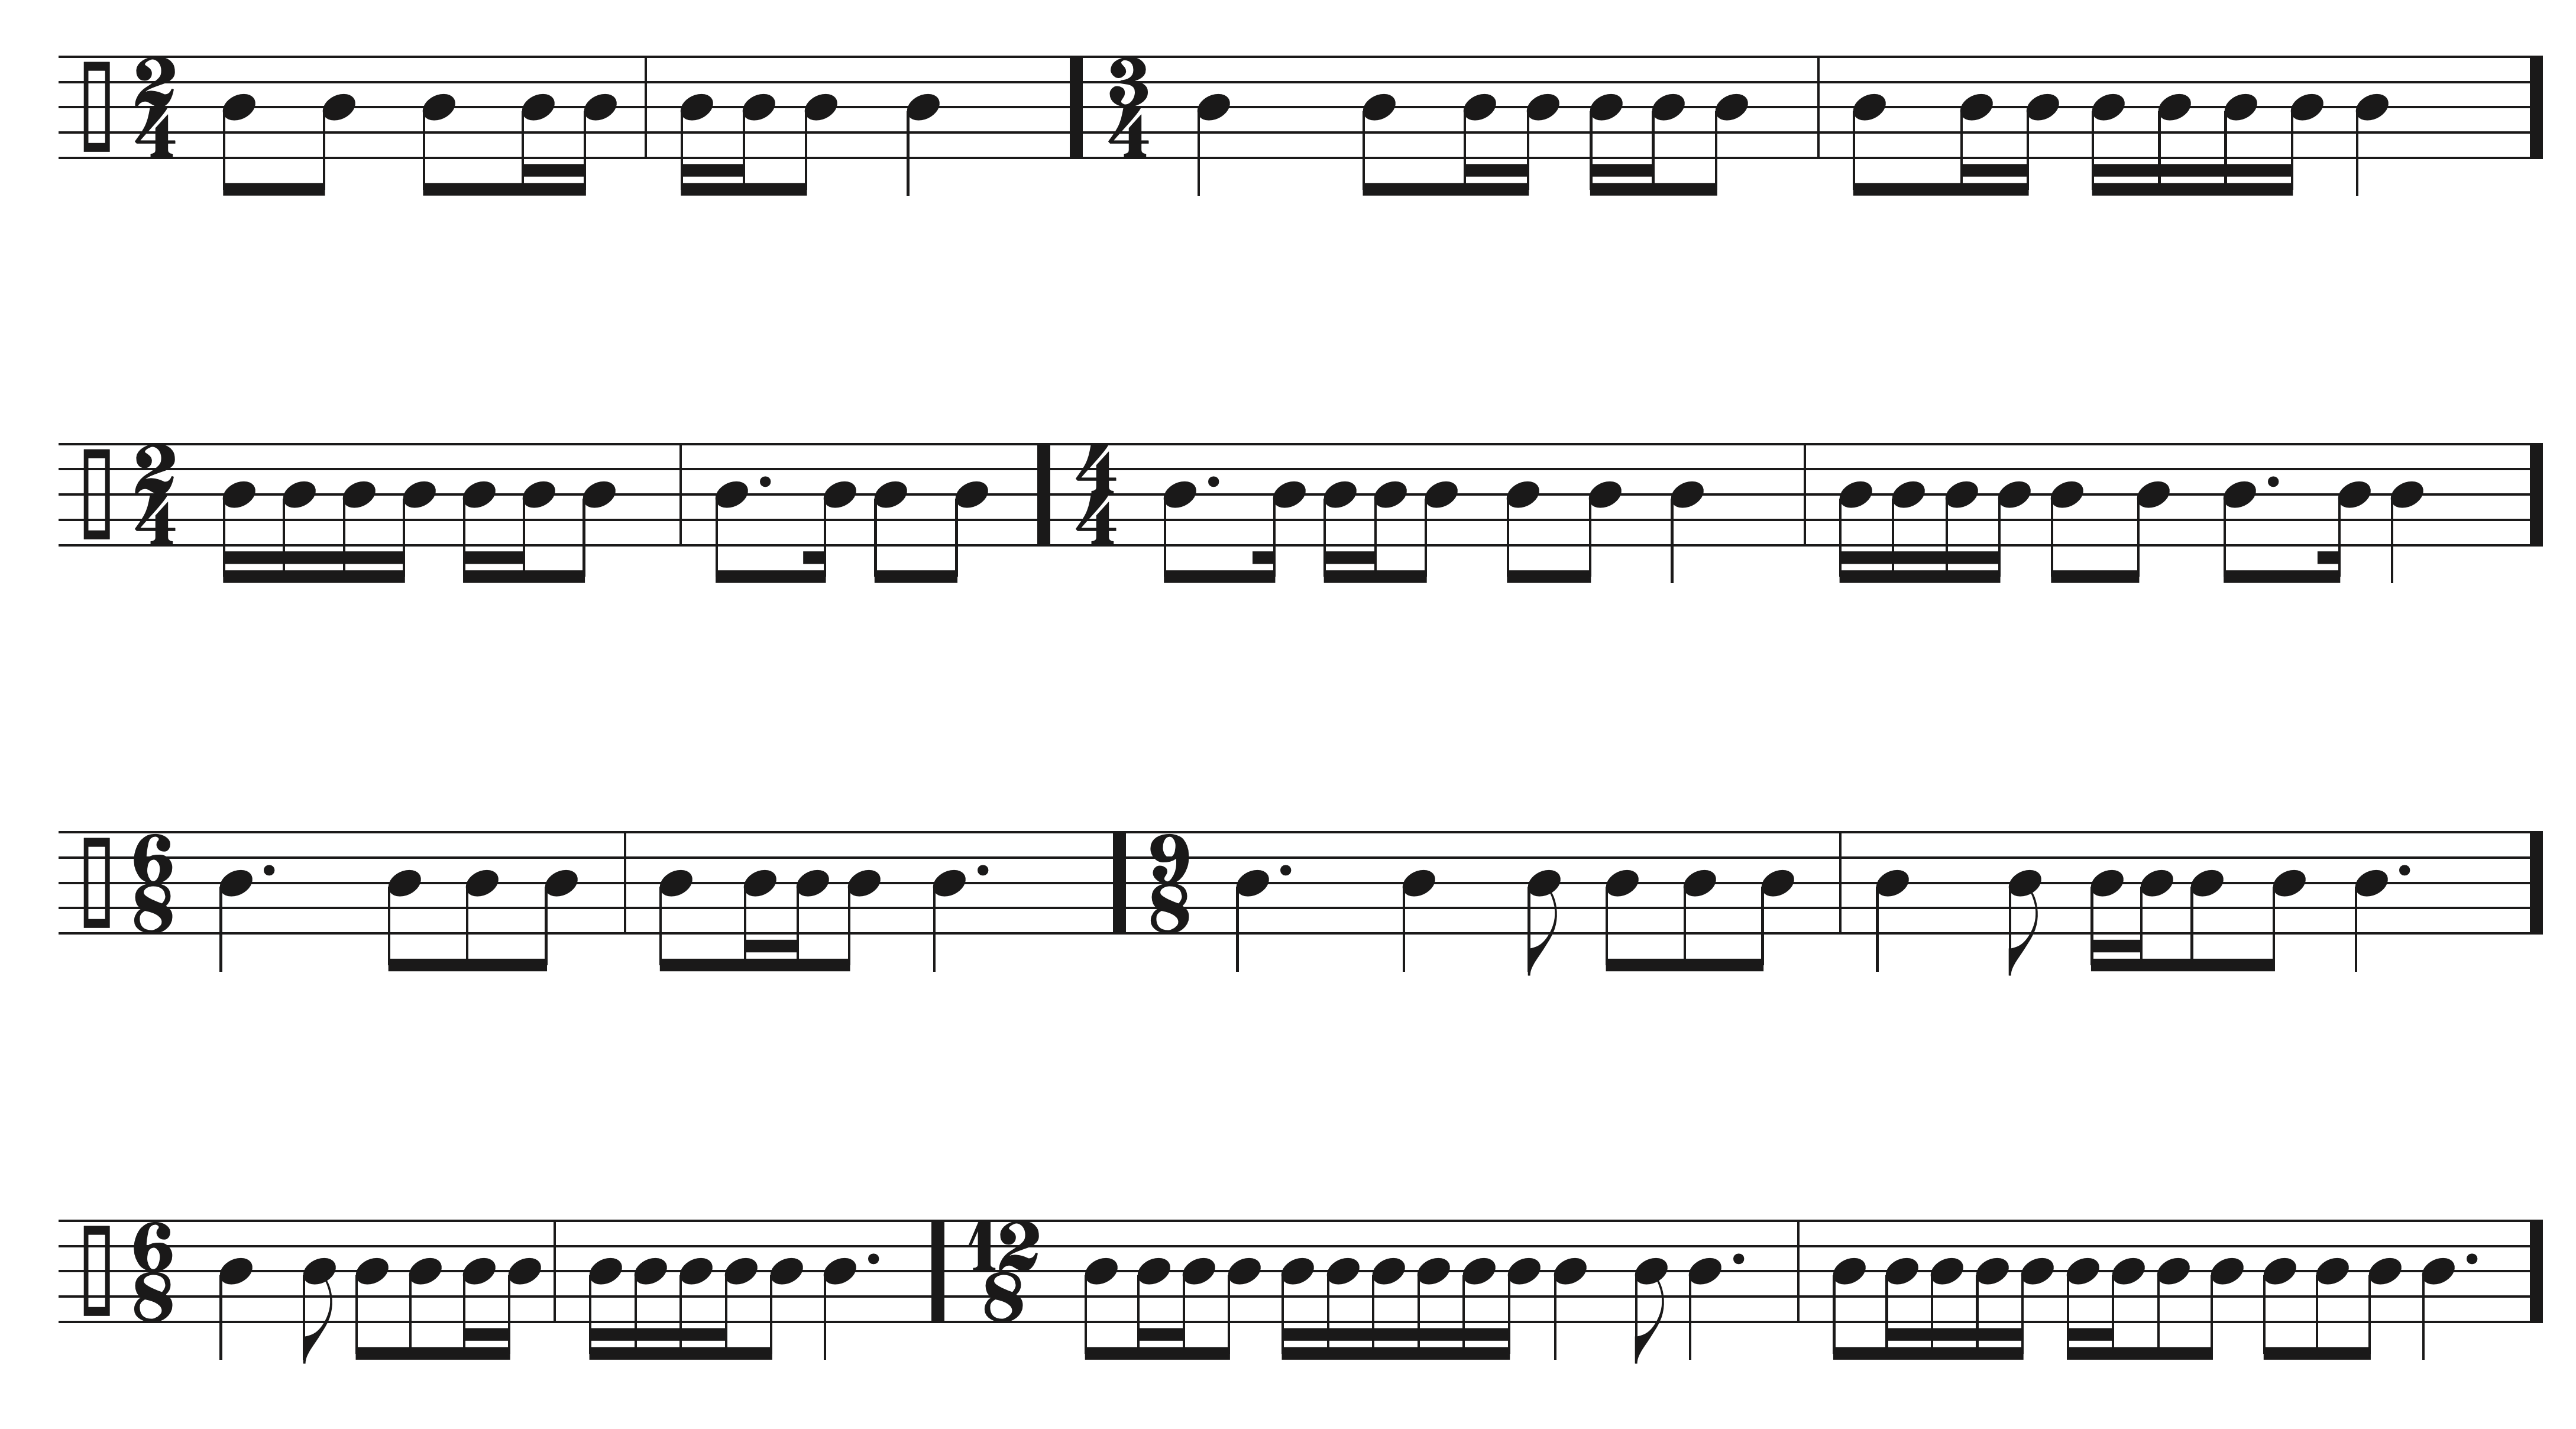 Basics of Meter Sight Singing exercise example